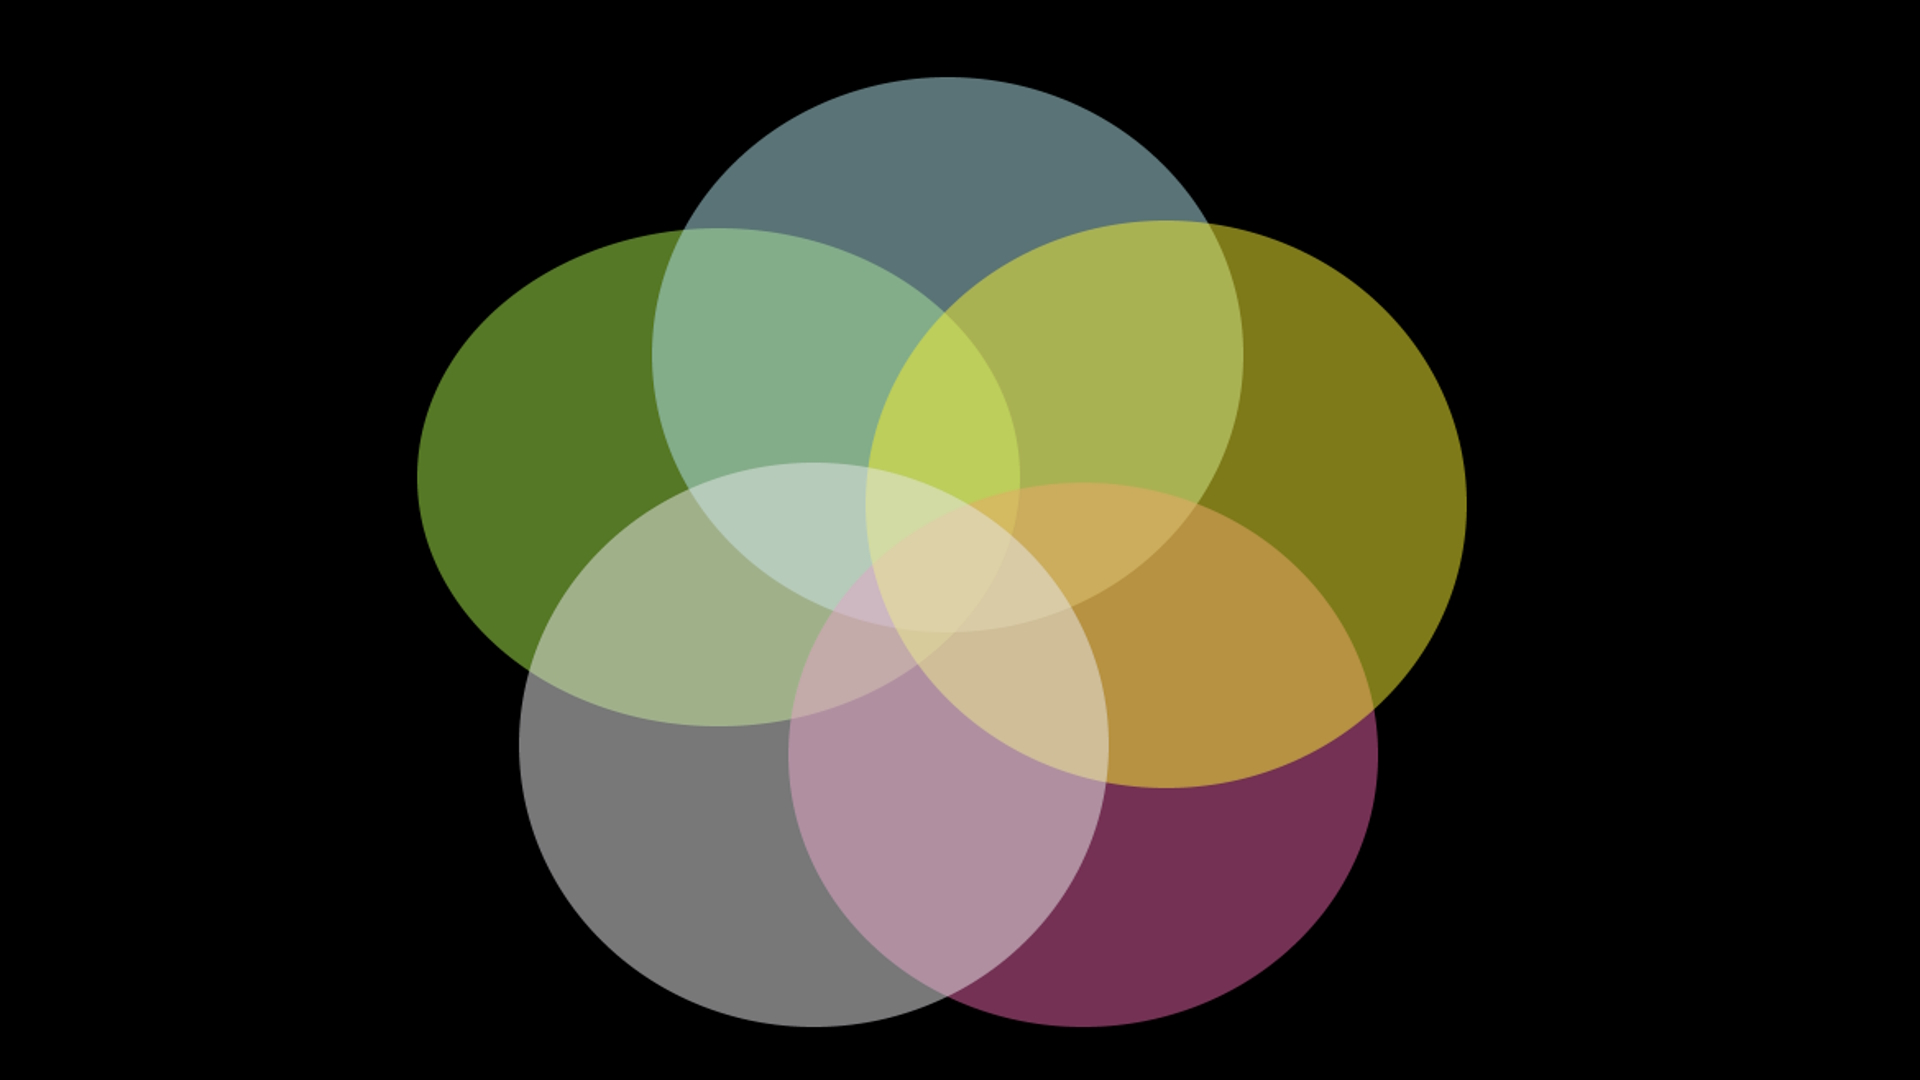 Multicolored Venn Diagram symbol design elements